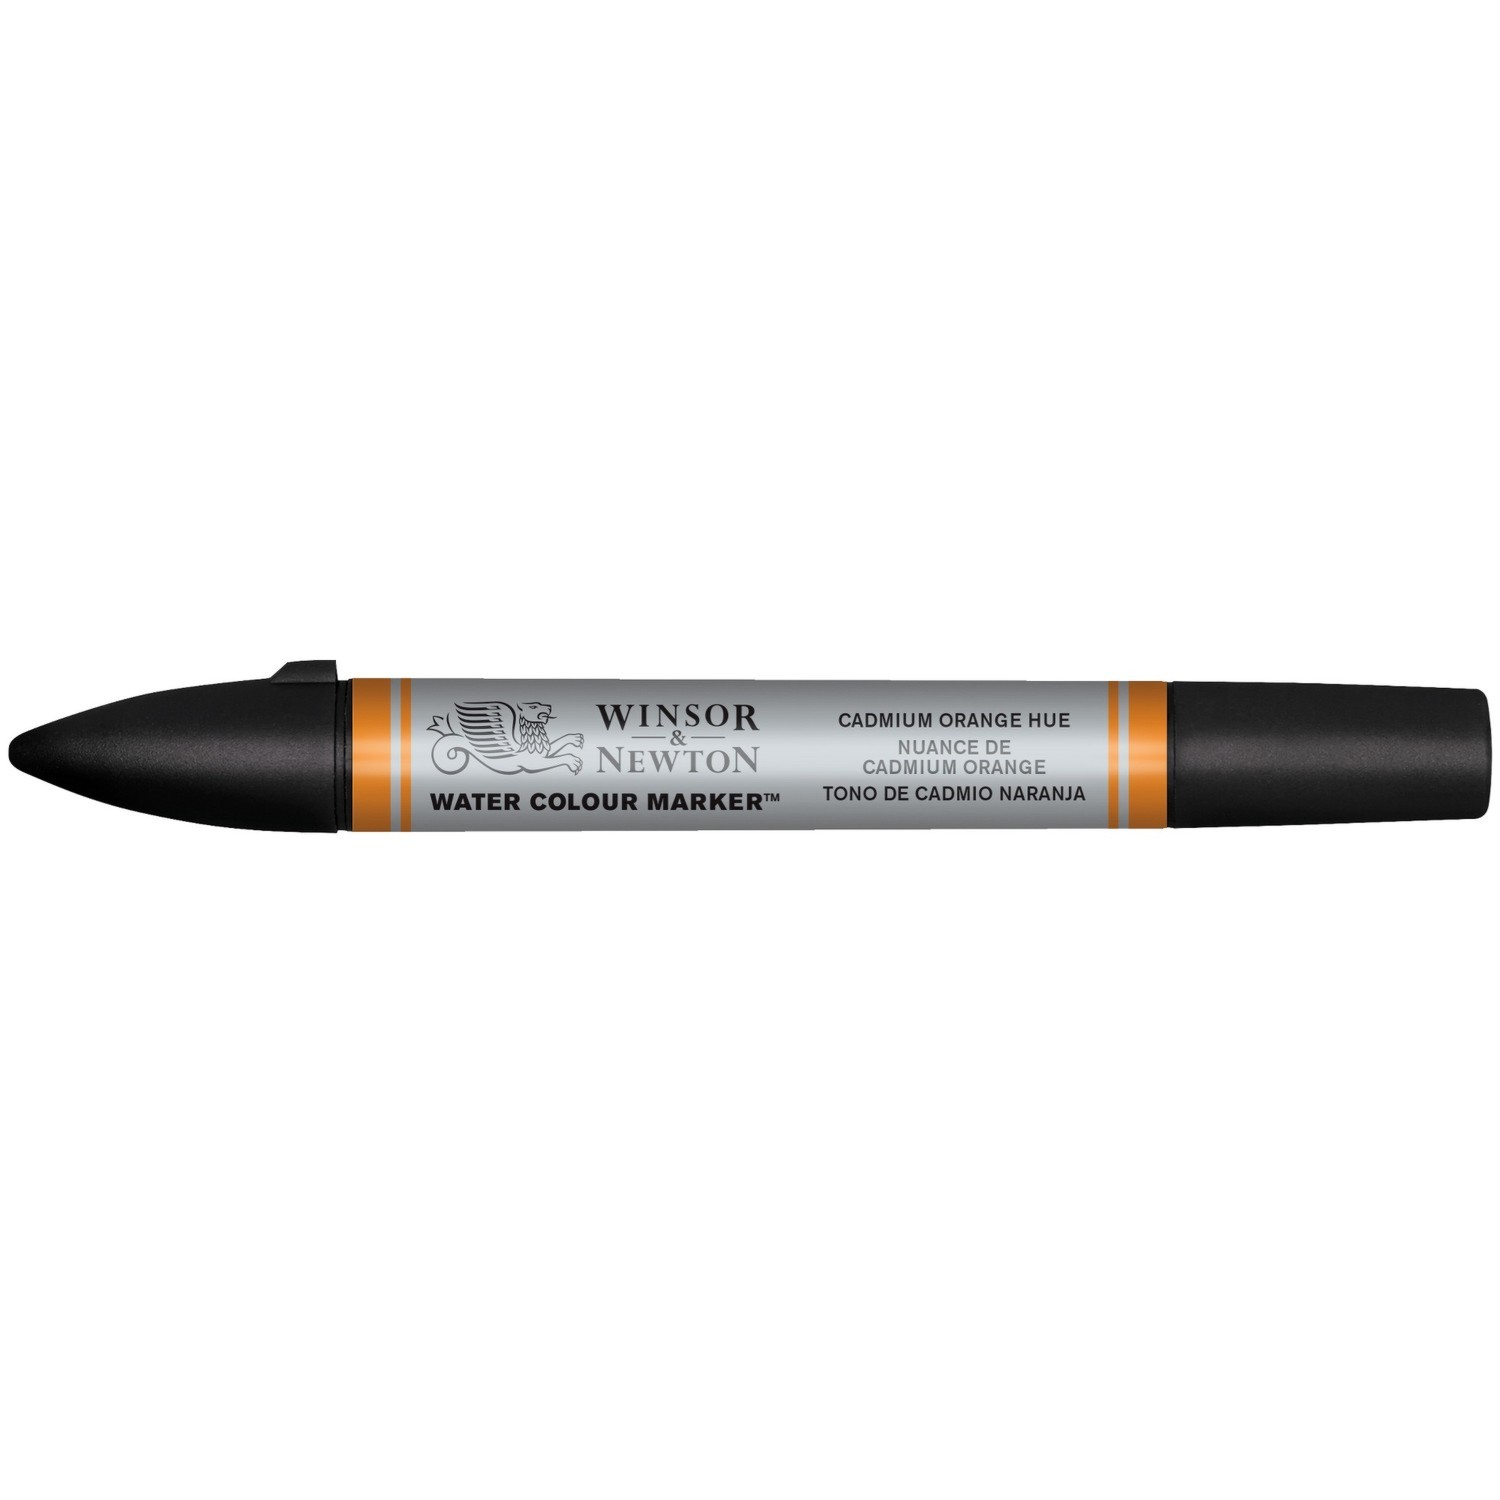 Winsor and Newton Water Colour Marker - Cadmium Orange Hue Image 1